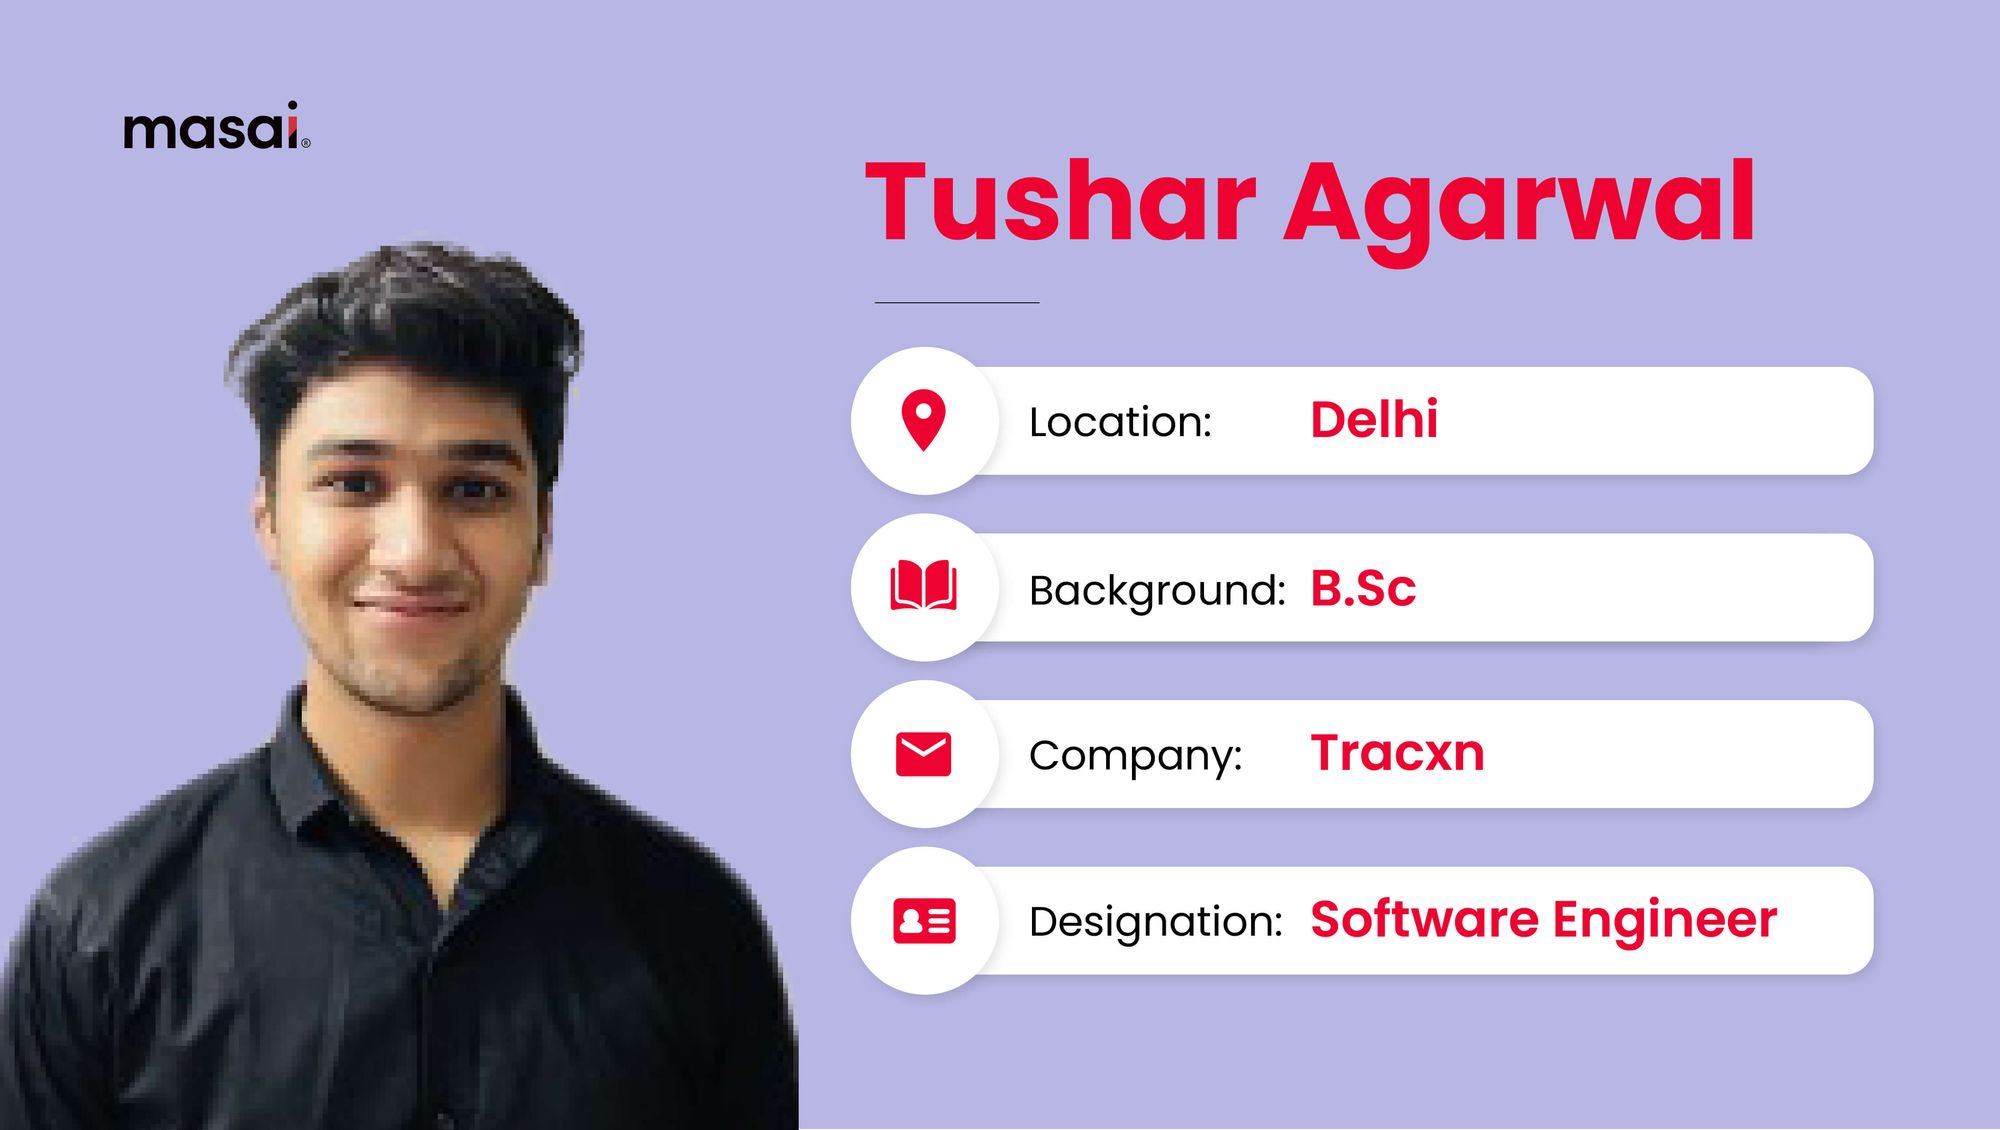 Tushar Agarwal - A Masai graduate now working as Software Engineer at Tracxn